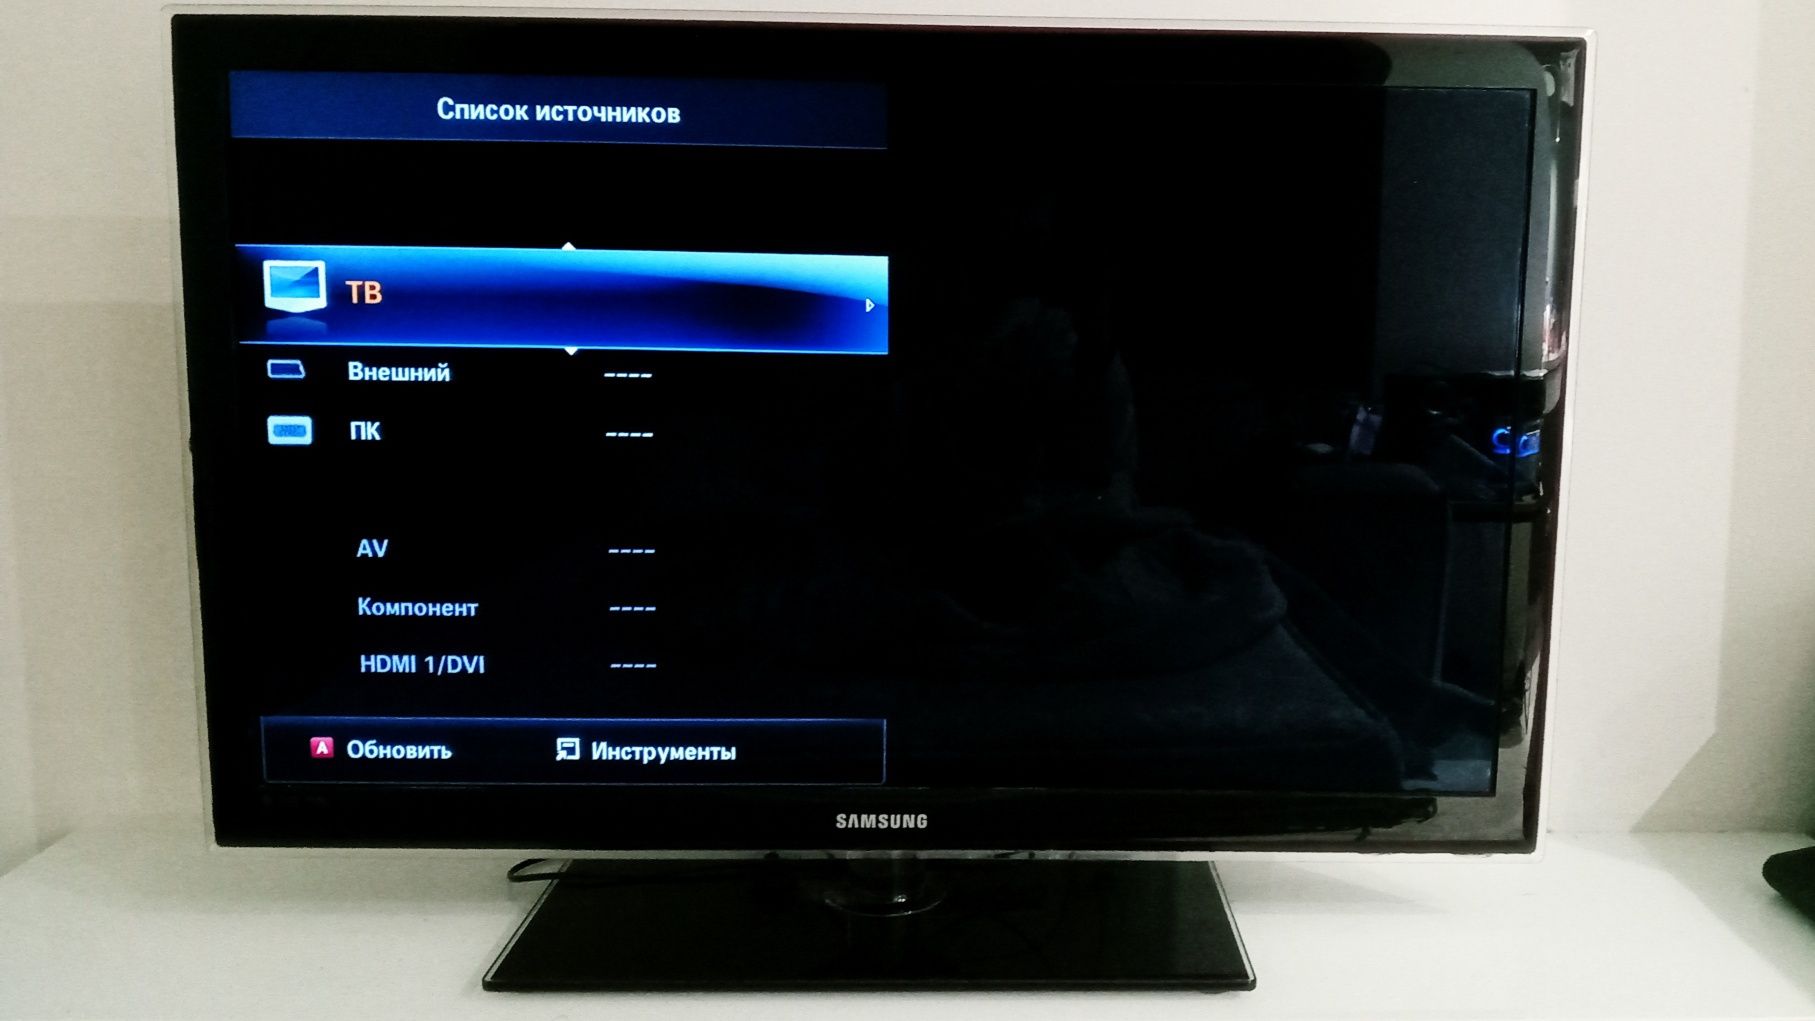 Телевизор Samsung UE40C5000
Модель : UE40C5000QWXXH
Код виробника: UE4